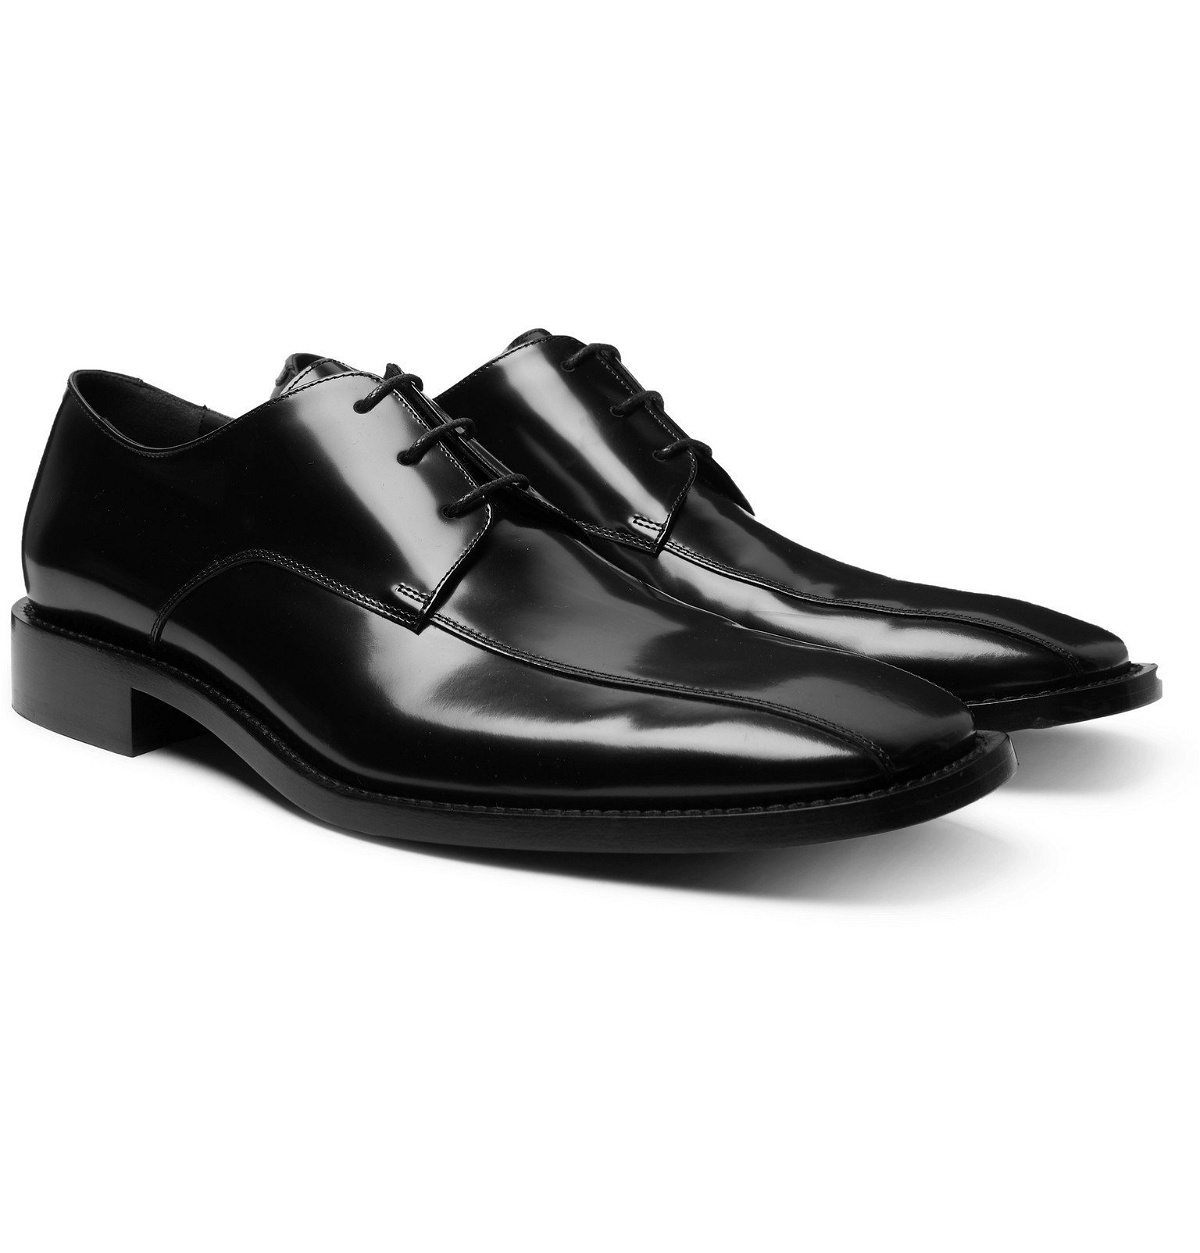 Polished-Leather Shoes - Black Balenciaga